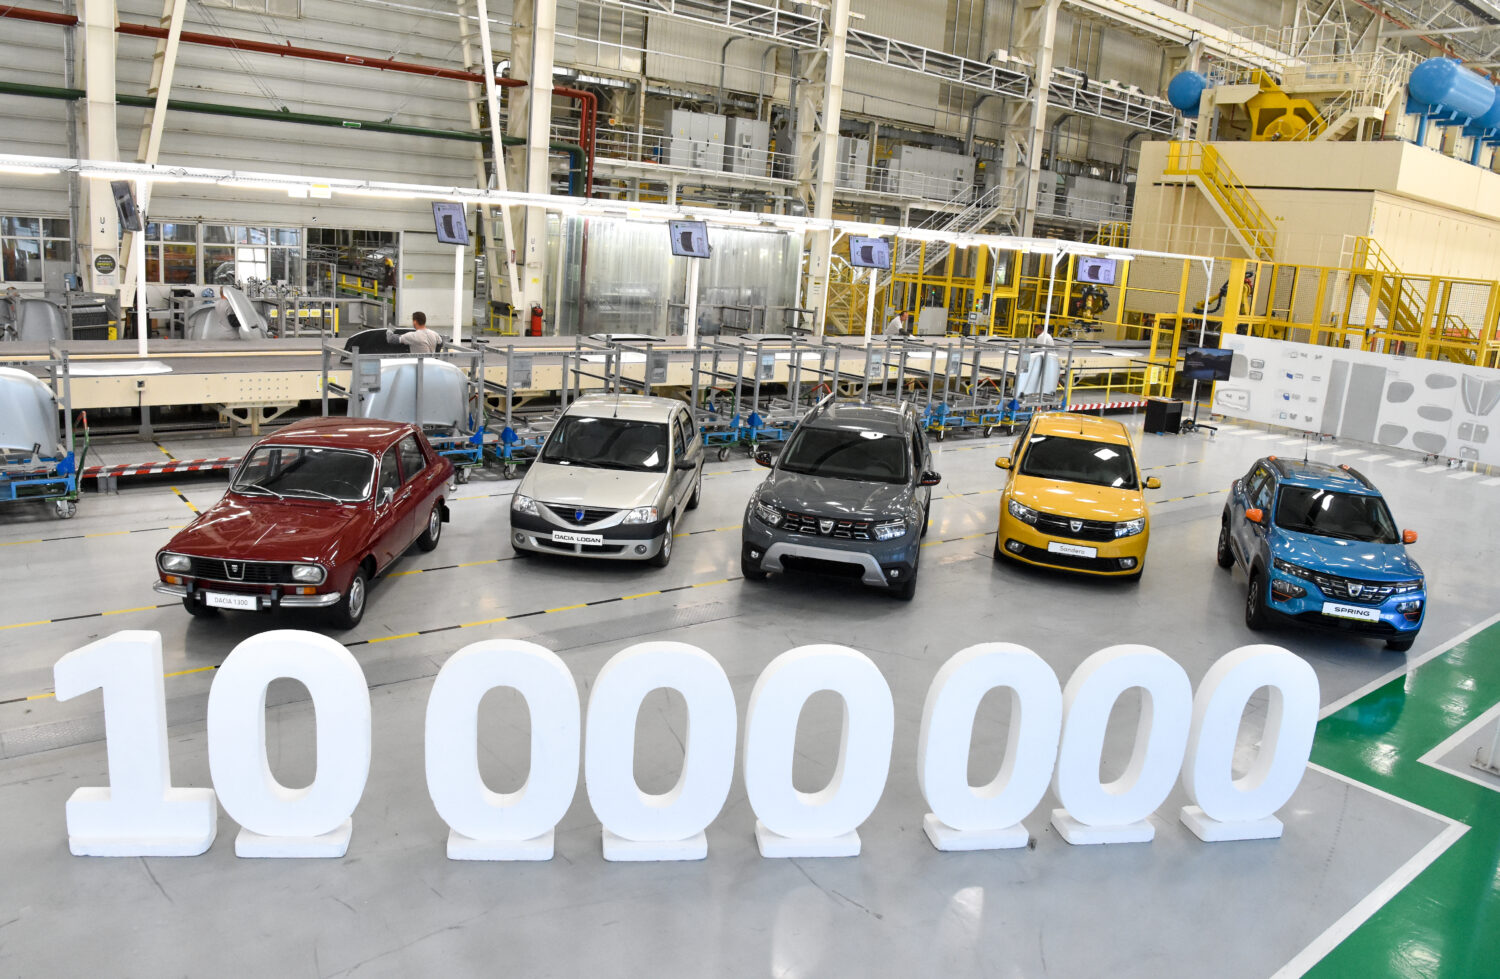 2022 - 10 Millions de Dacia produites